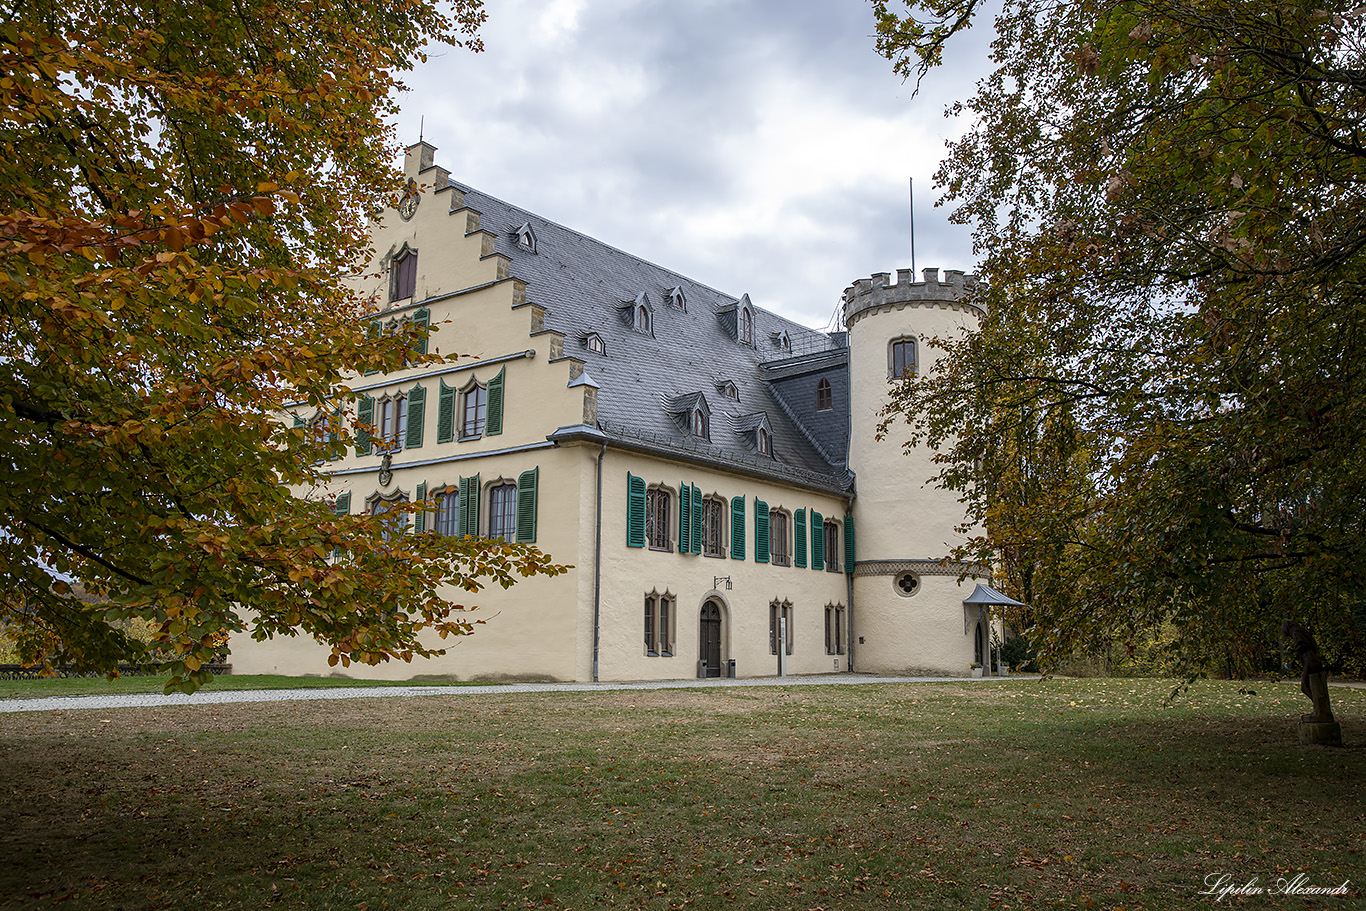 Дворец Розенау (Schloss Rosenau) - Розенау (Rosenau) - Германия (Deutschland)